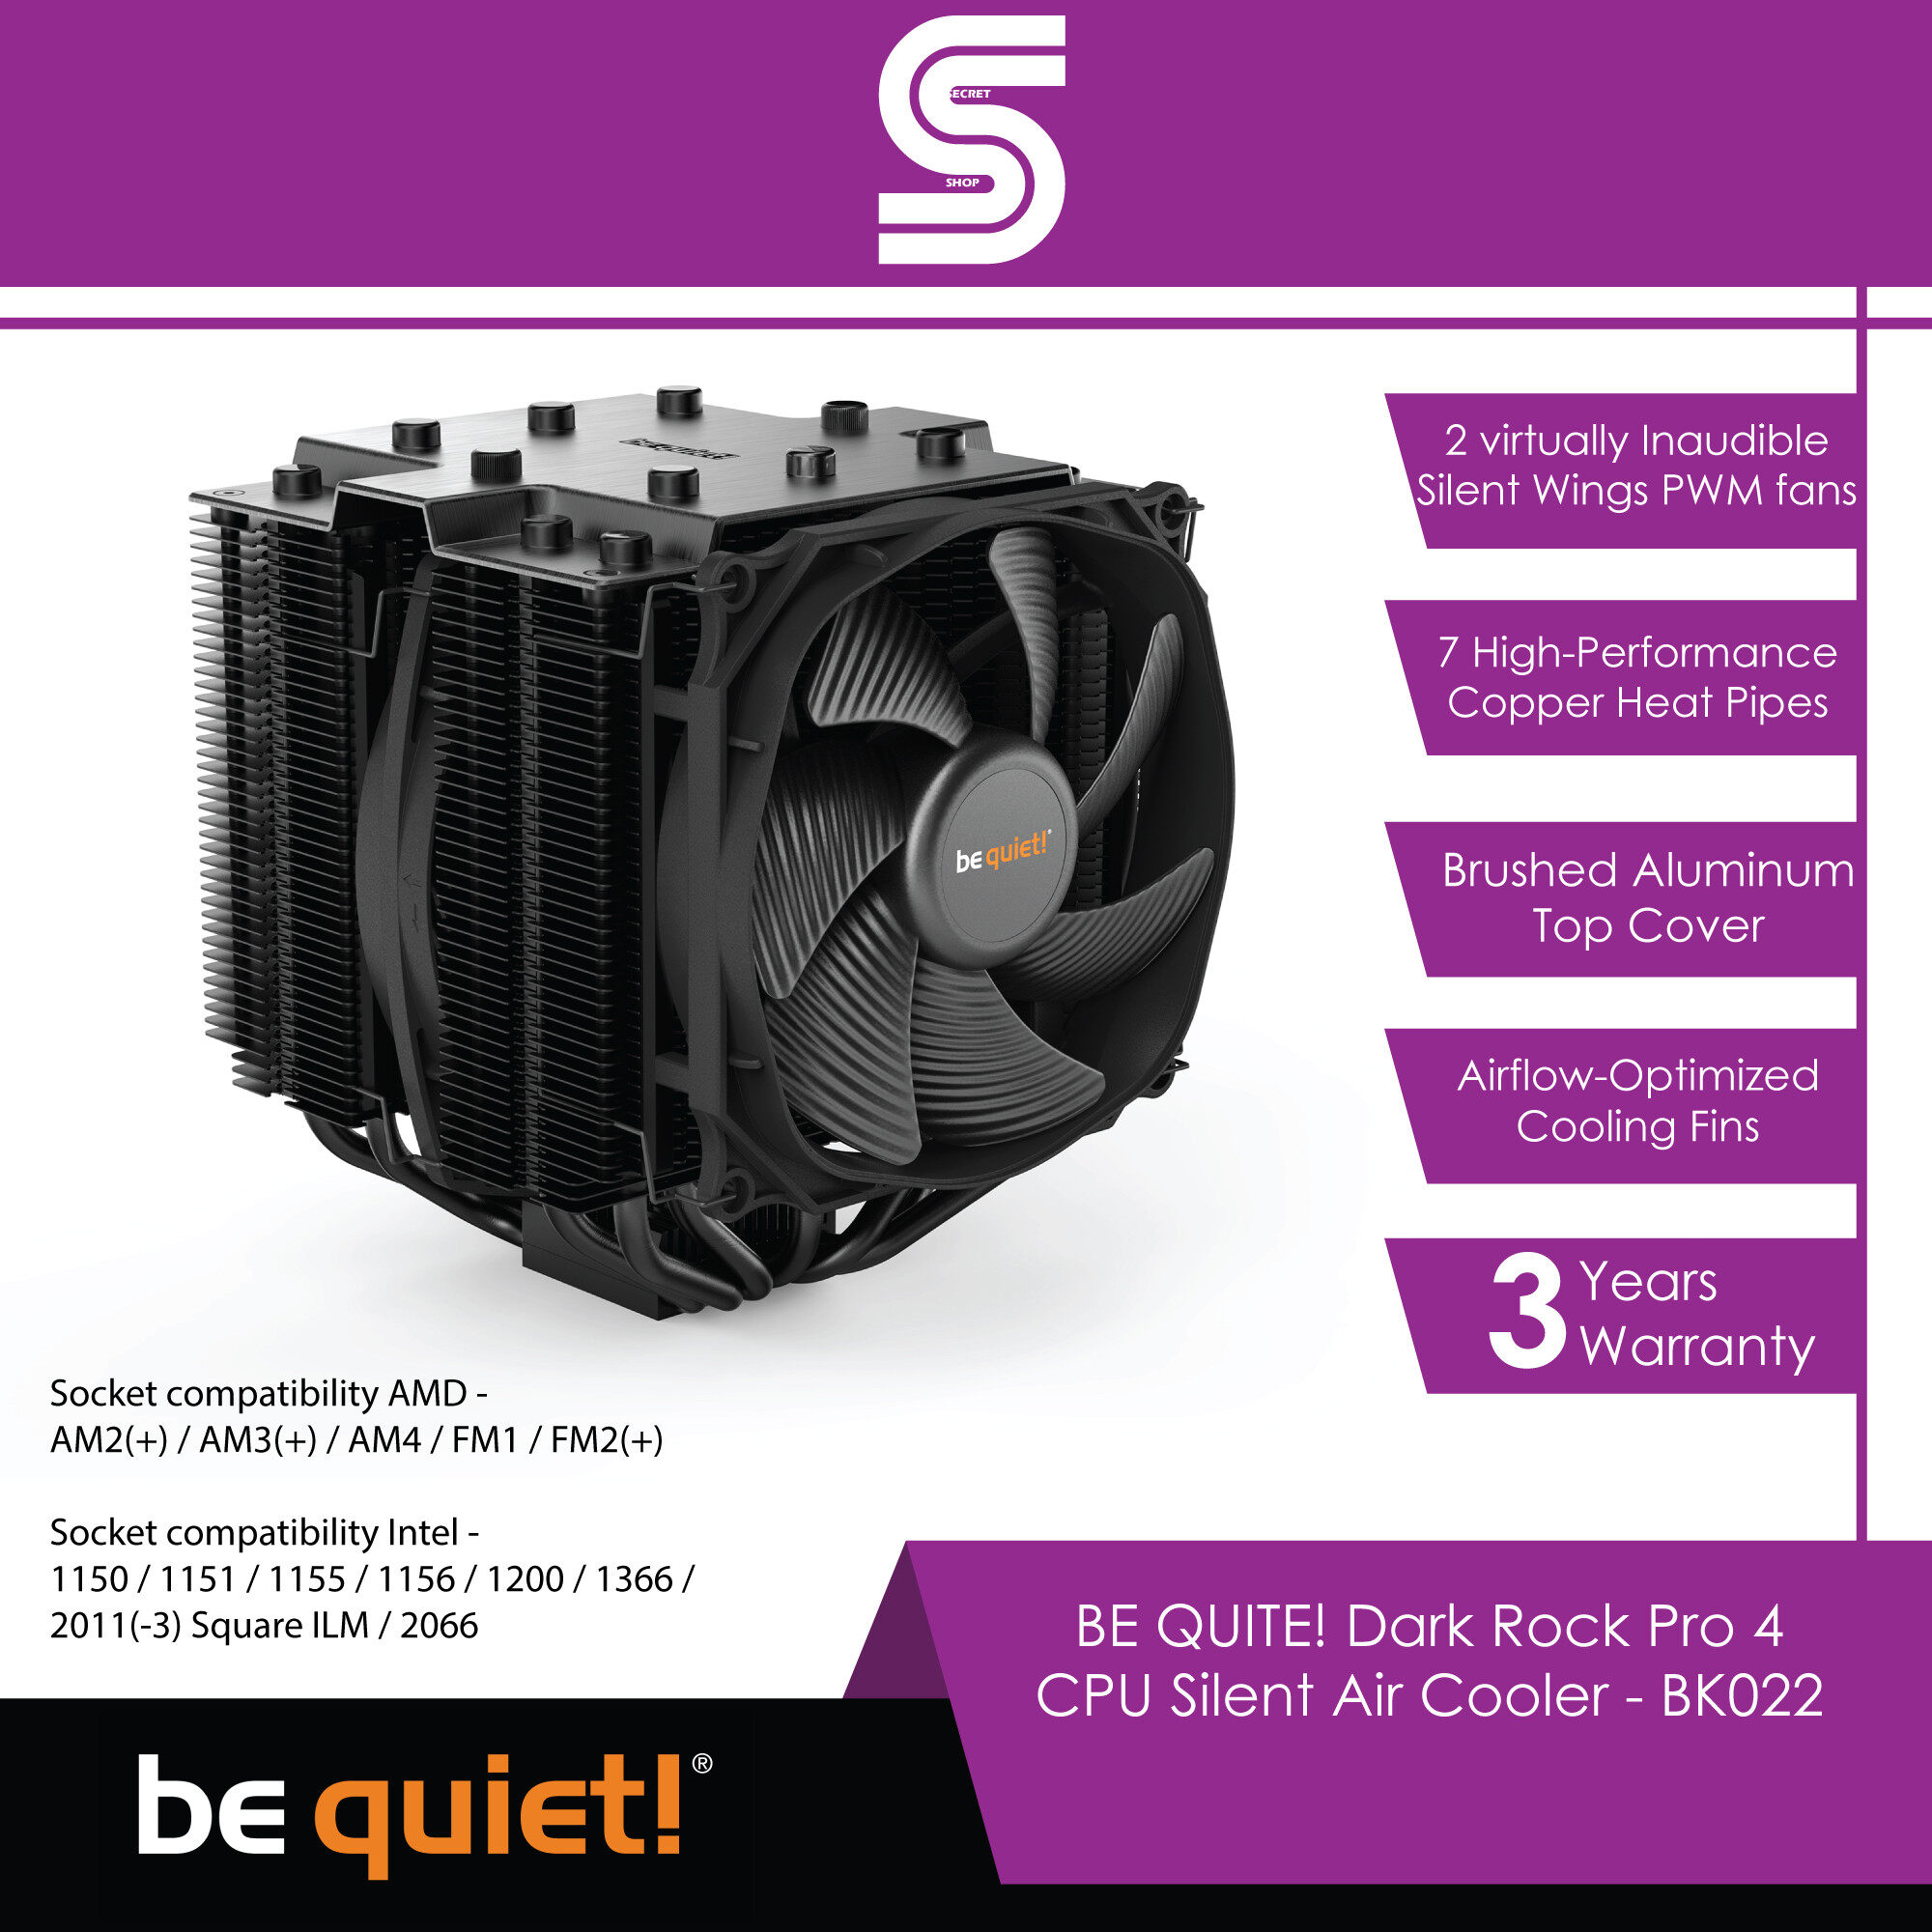 BE QUIET! Dark Rock Pro 4 CPU Silent Air Cooler - BK022